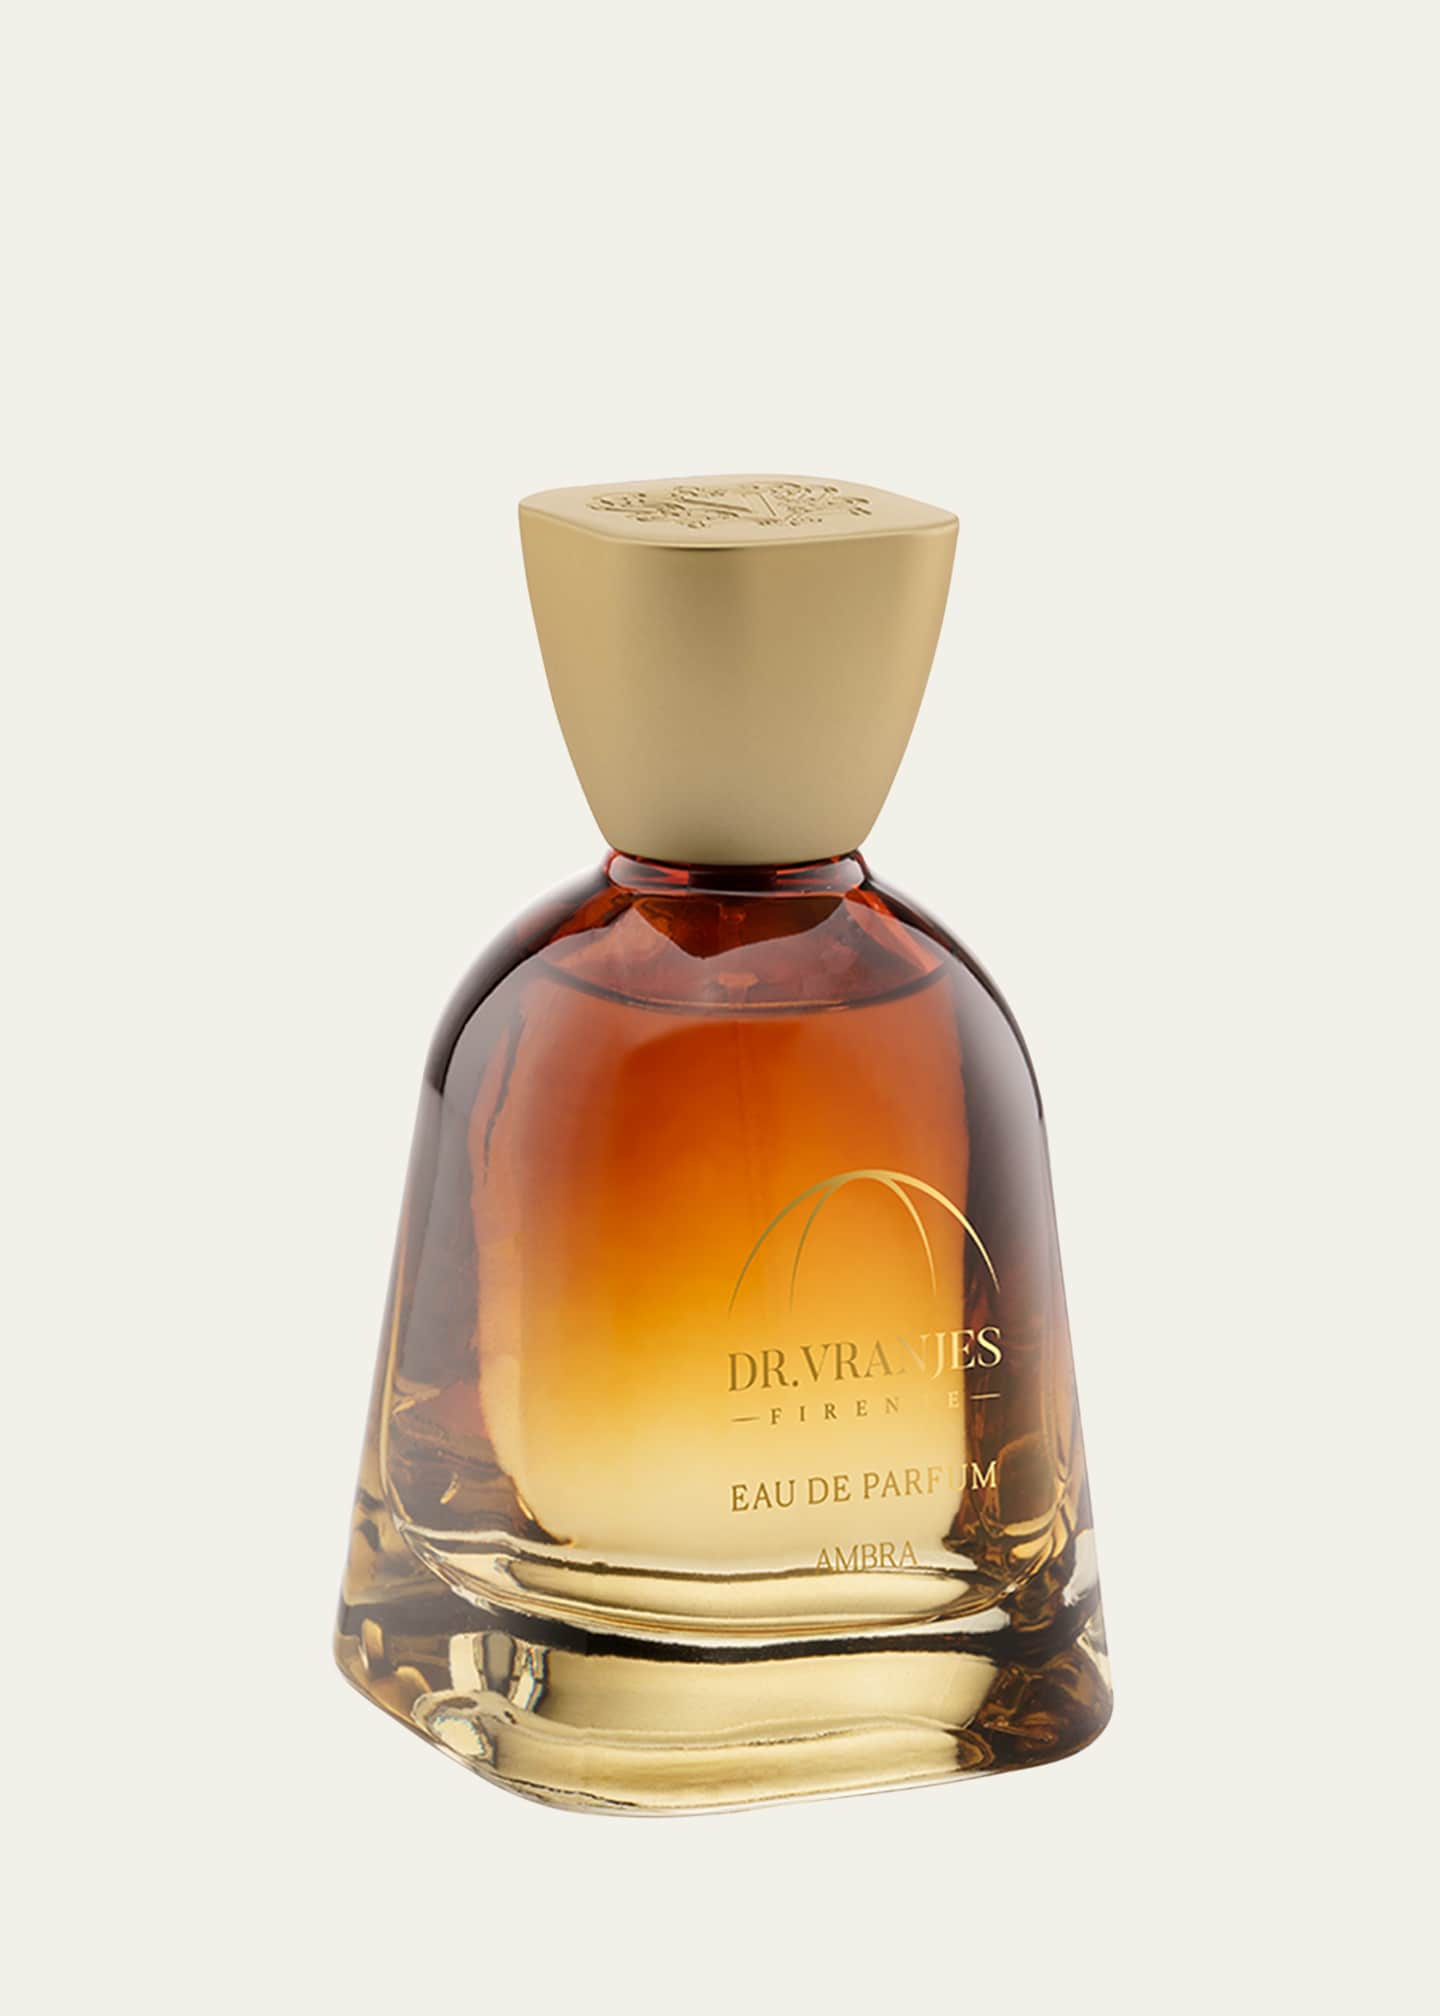 Dr. Vranjes Firenze Ambra Eau De Parfum, 3.4 oz. - Bergdorf Goodman